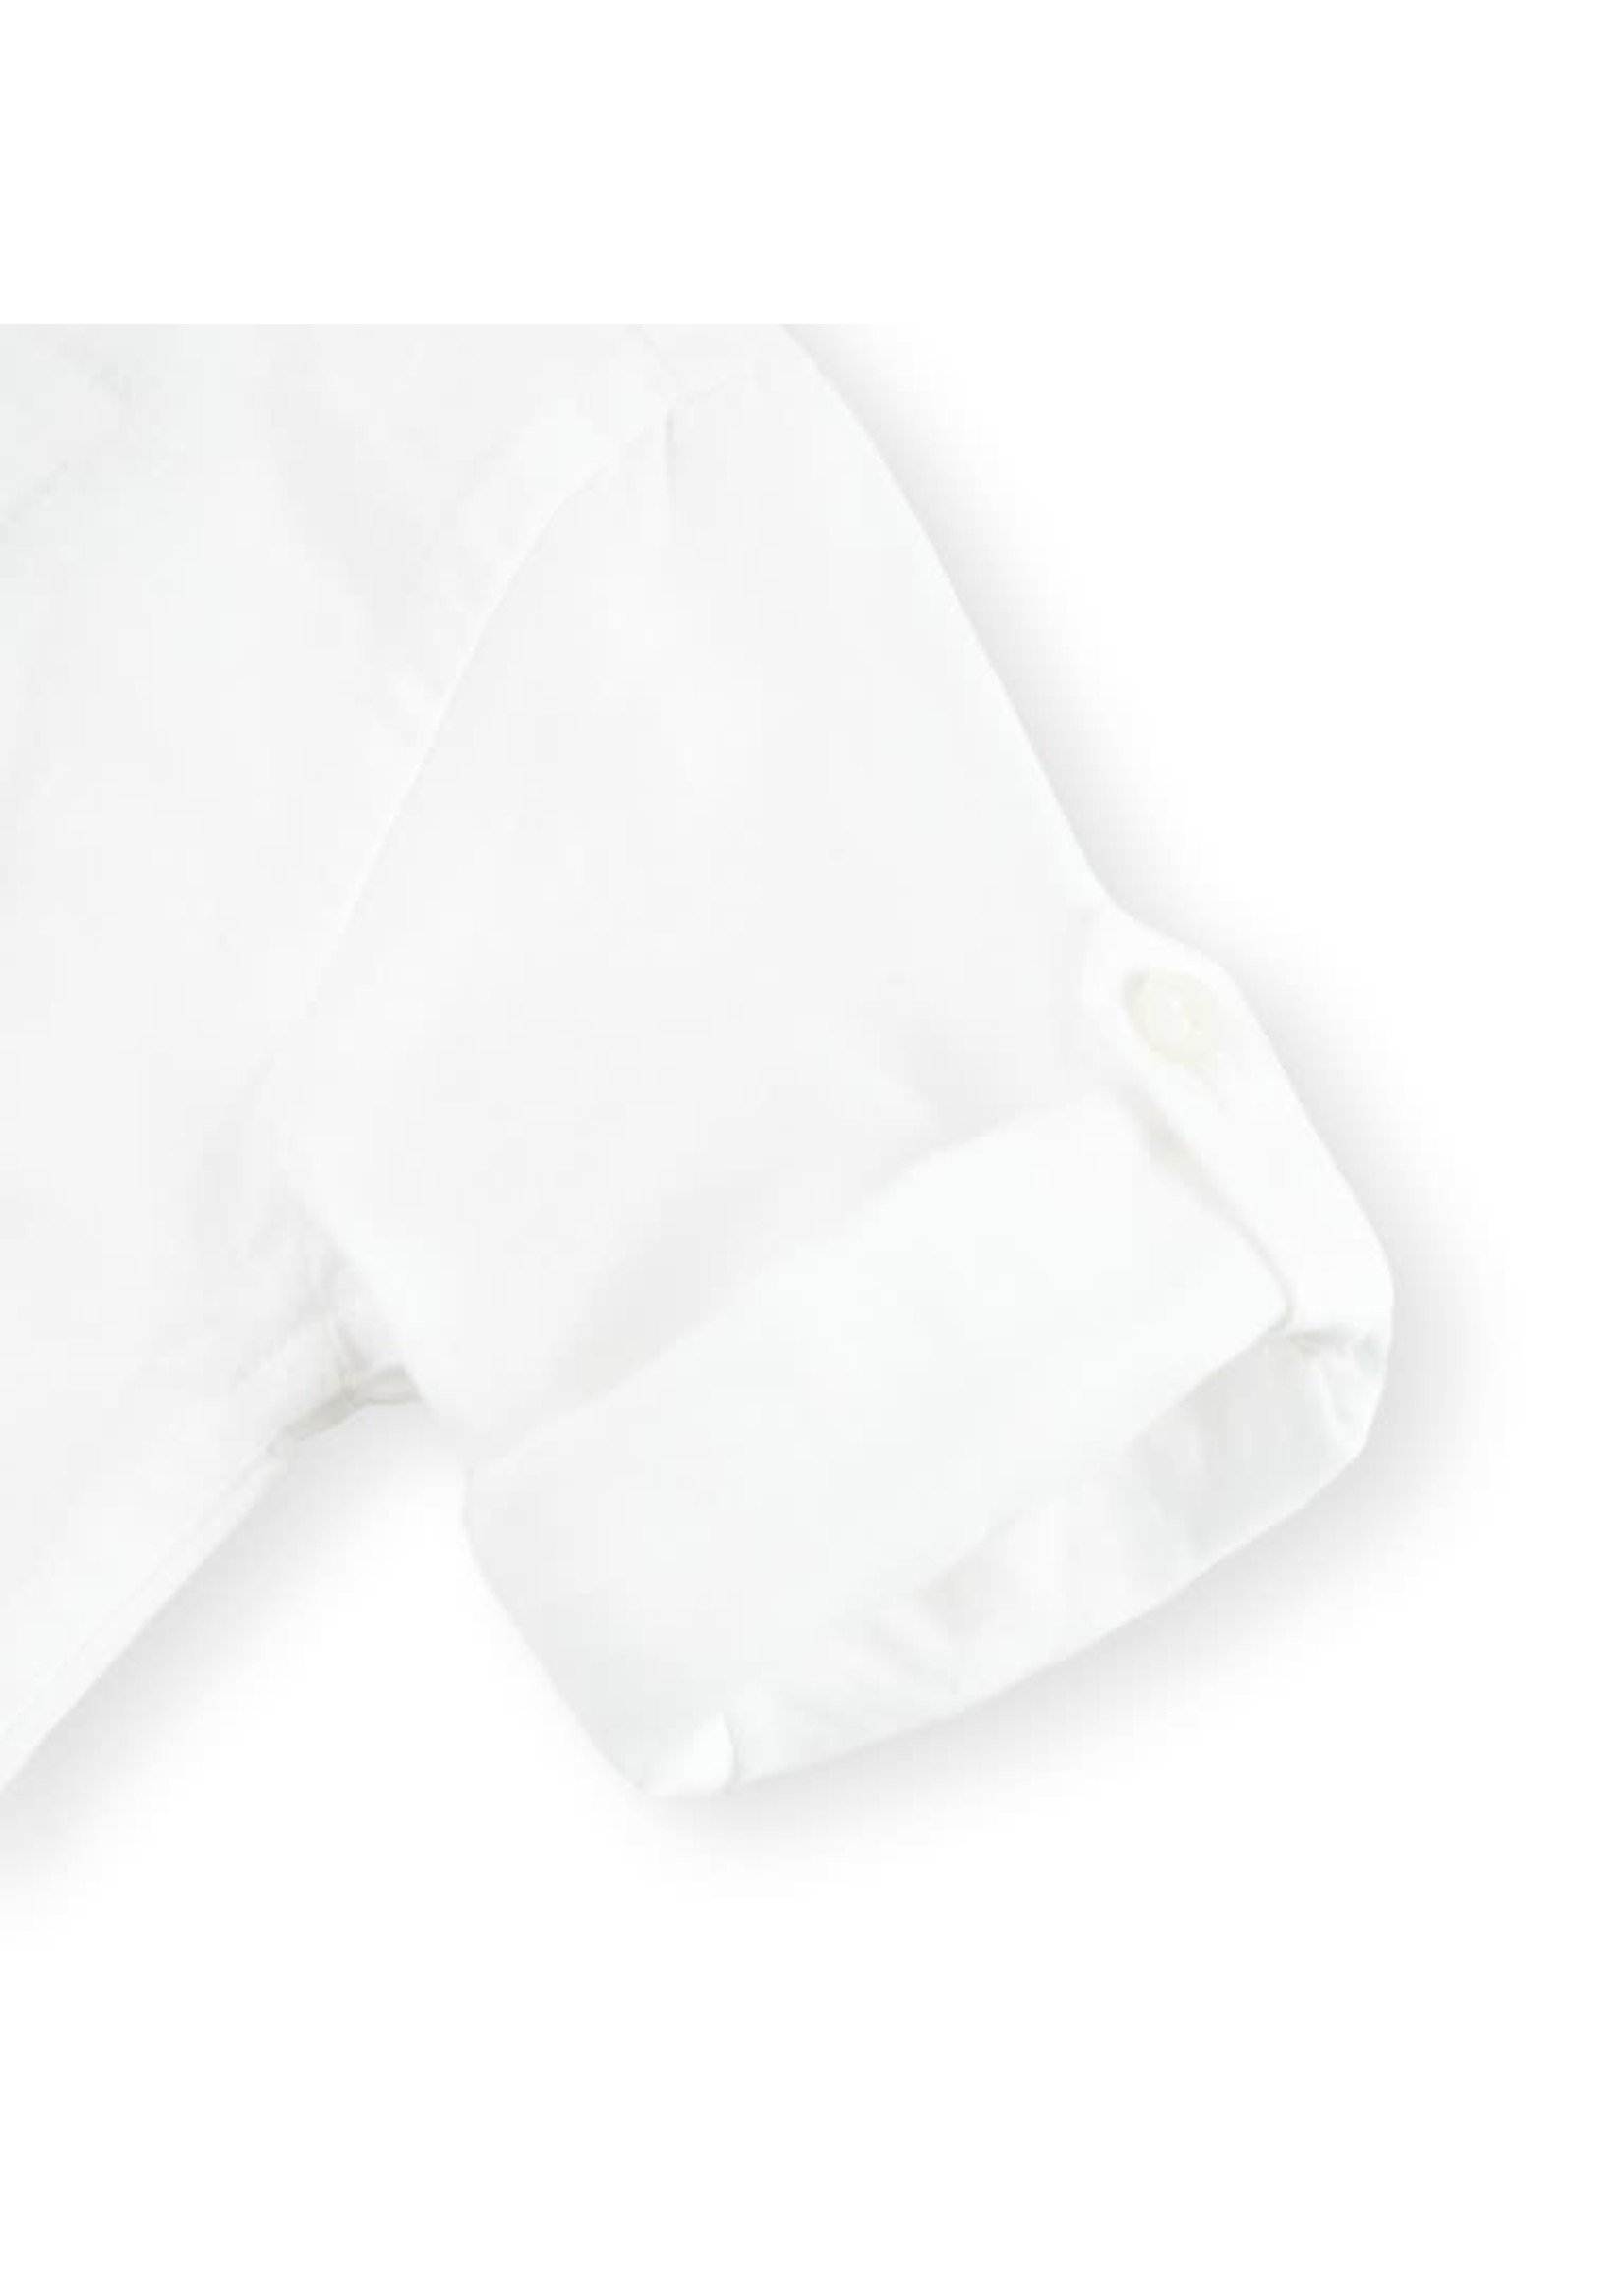 Boboli Boboli Linen shirt long sleeves for boy WHITE 716048